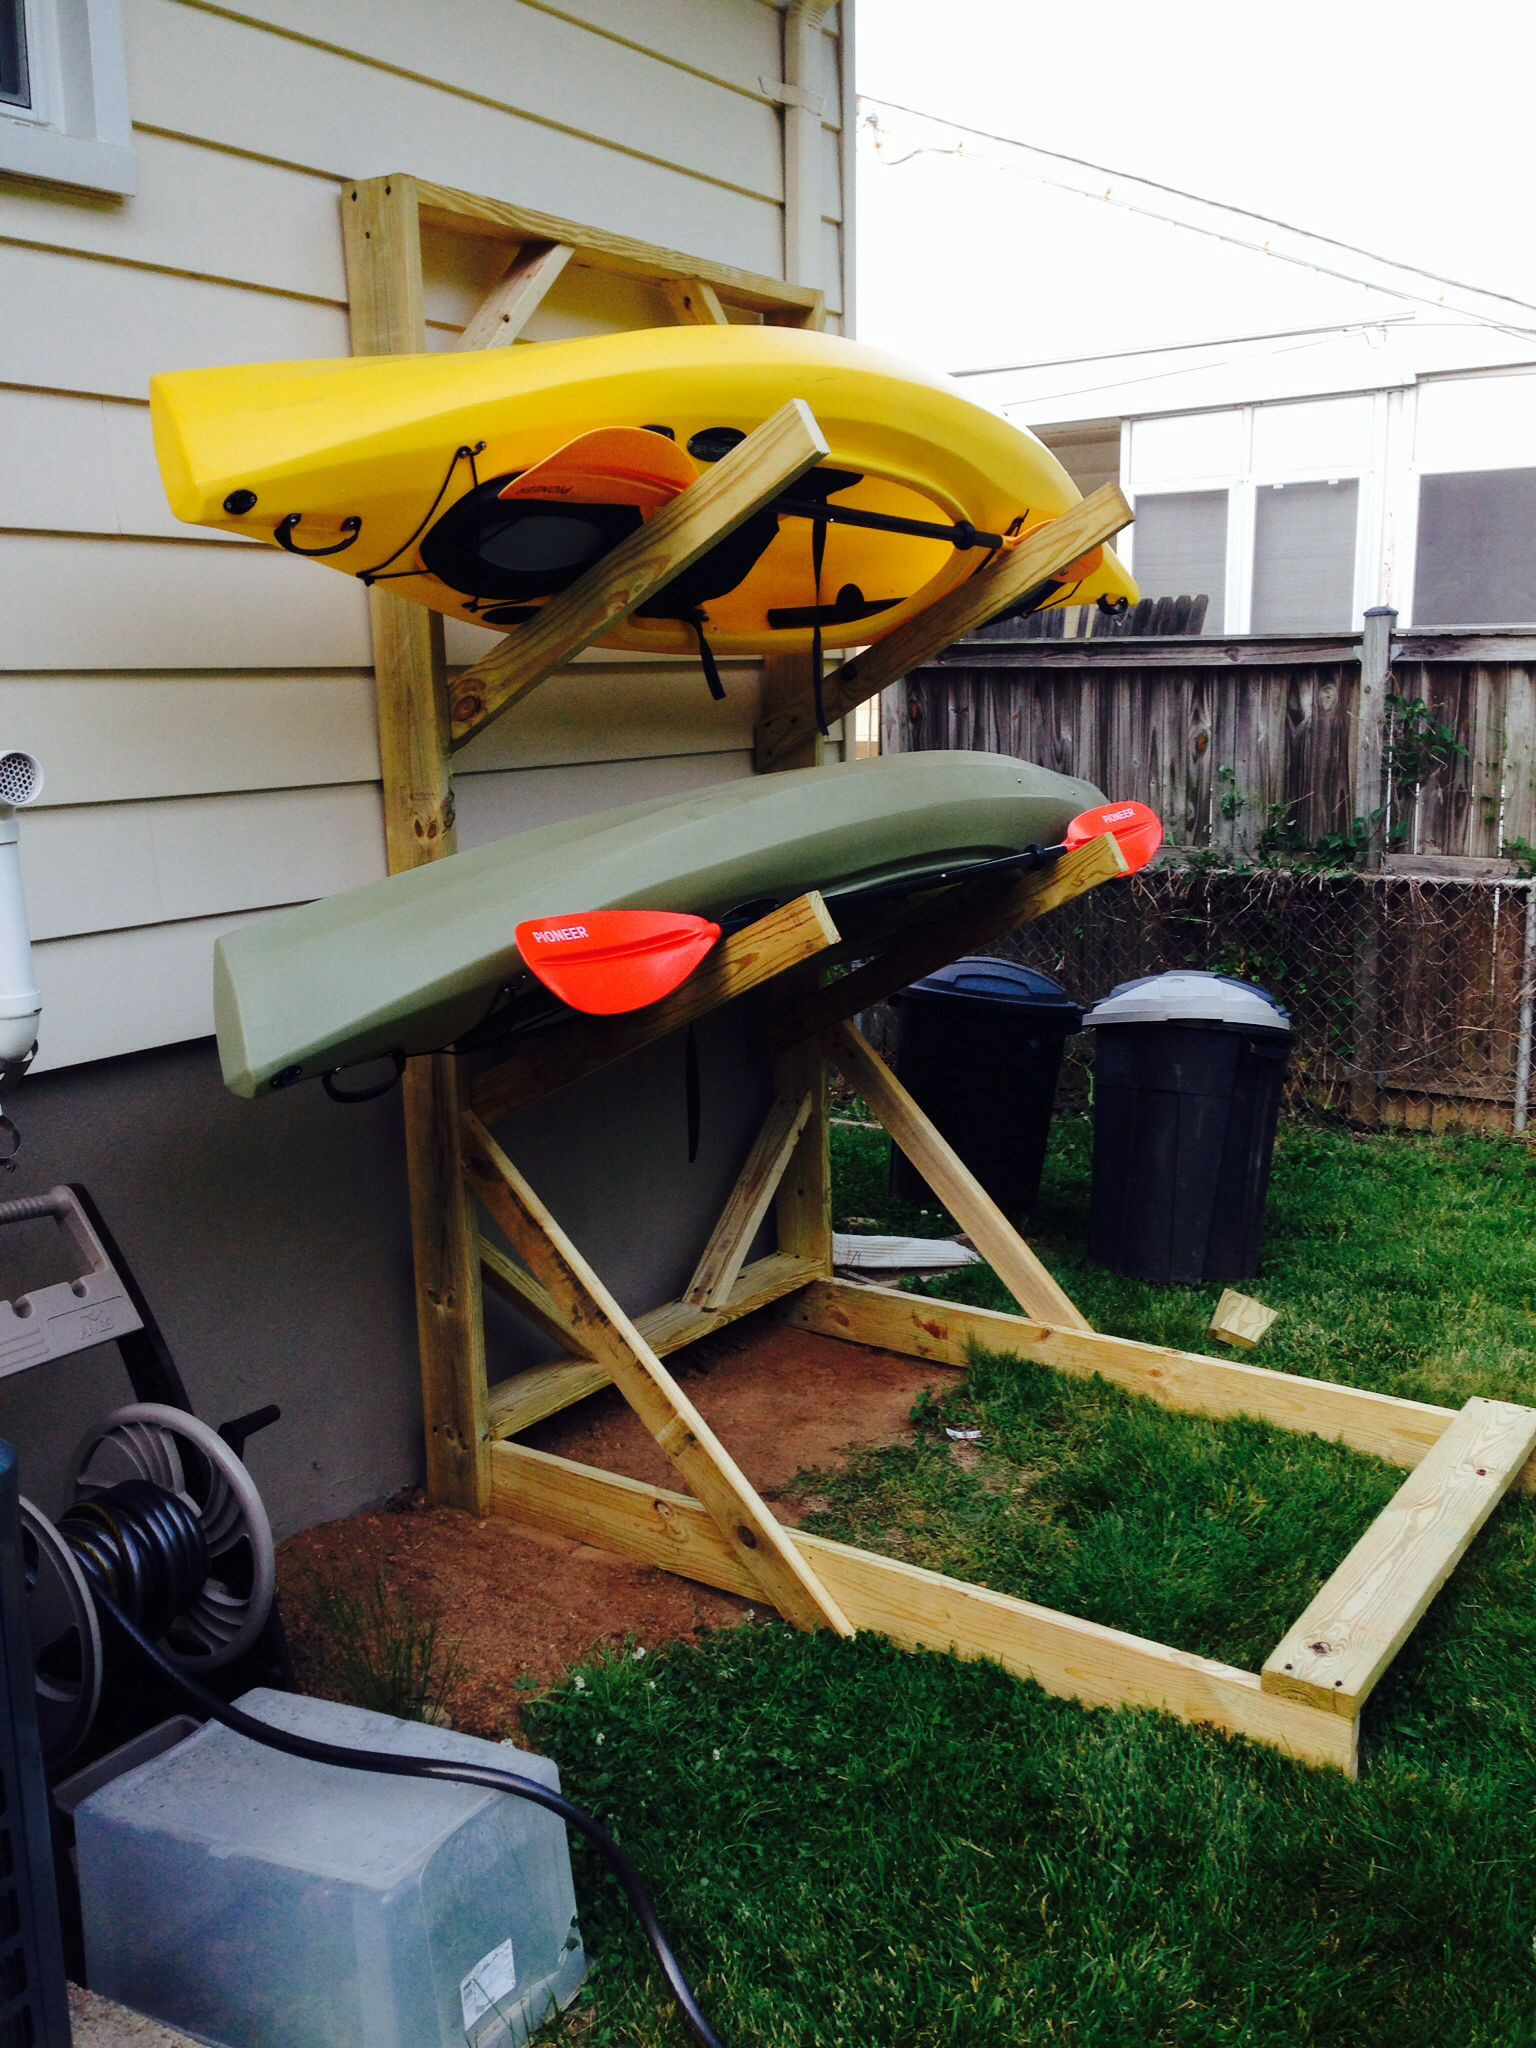 Best ideas about DIY Kayak Storage Rack
. Save or Pin plete Diy outdoor canoe storage rack J Bome Now.